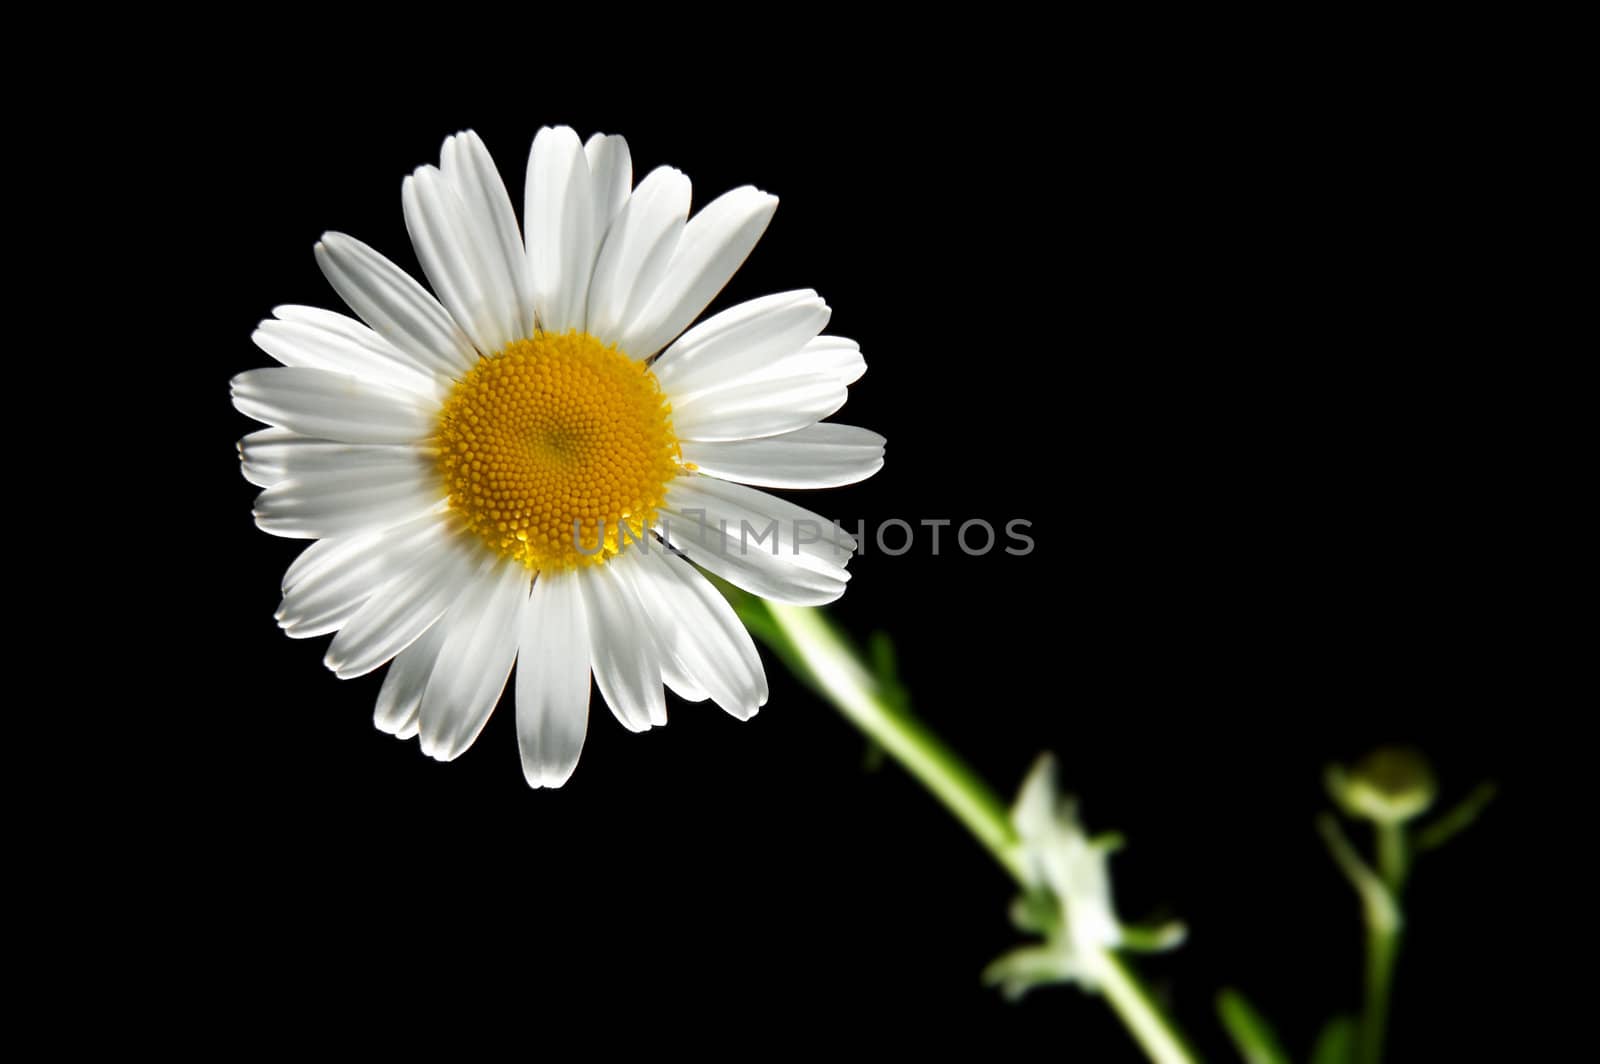 Daisywheel flower on the black background.